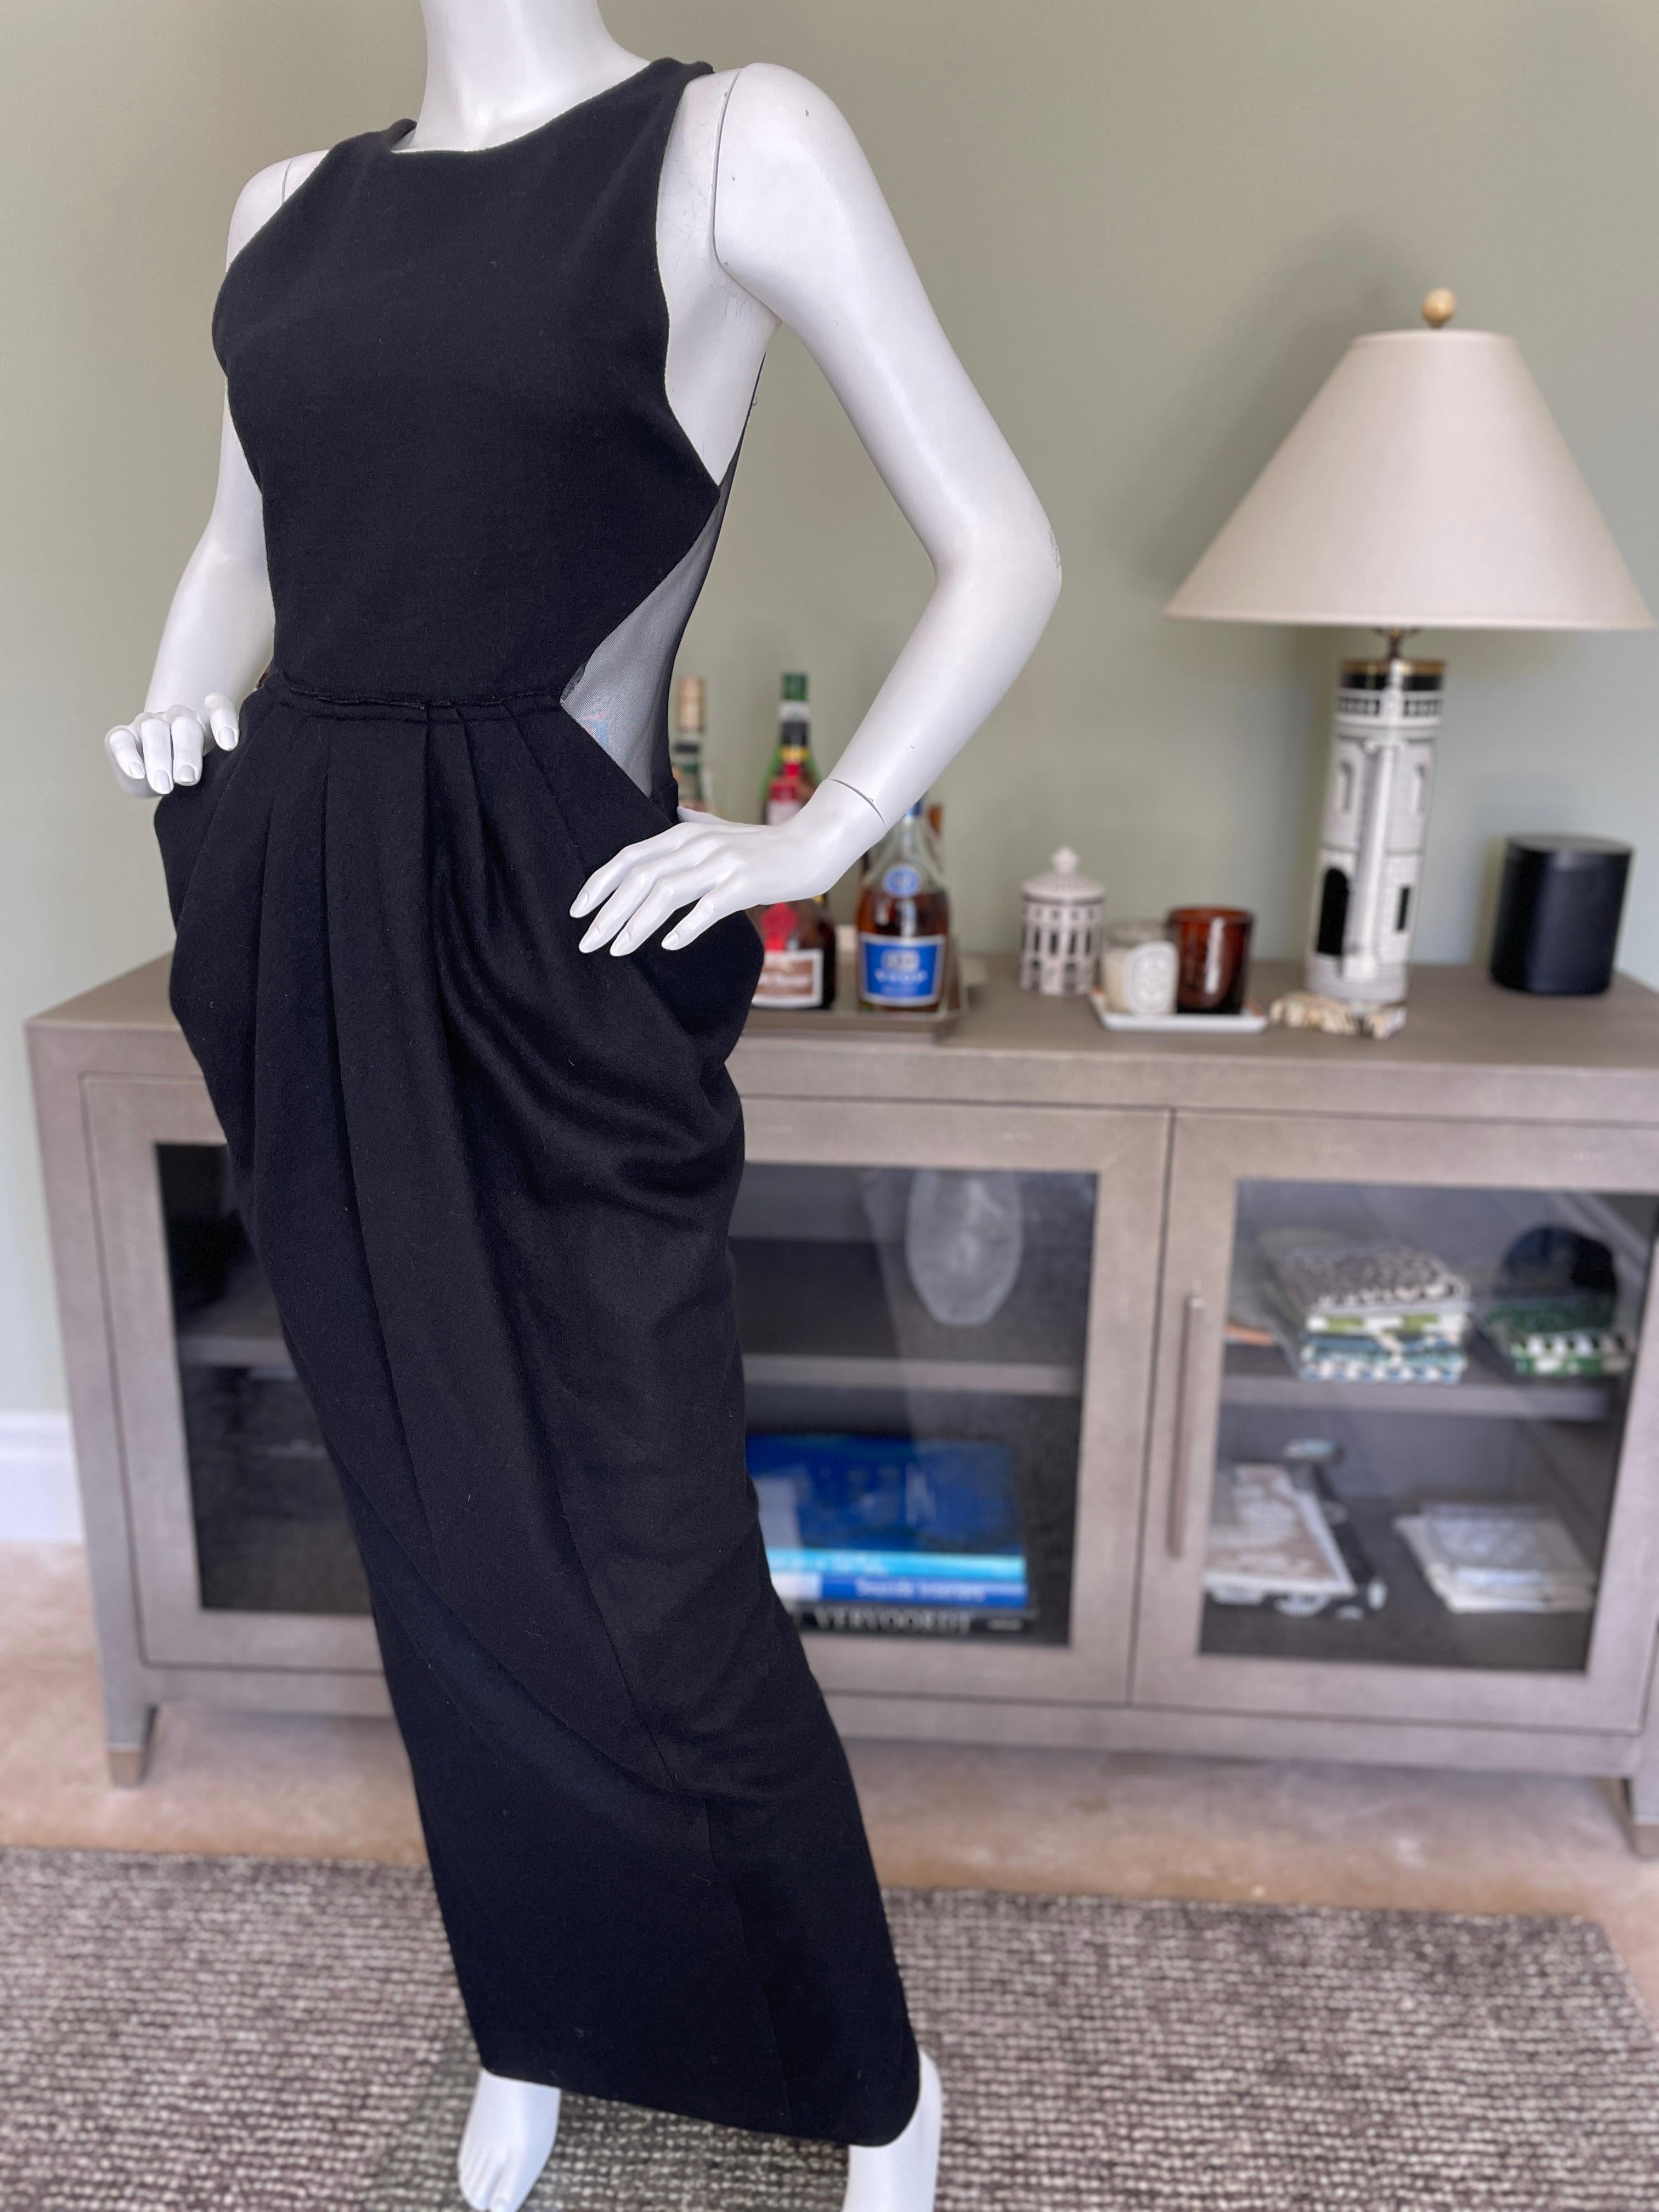 Donna Karan Vintage Black Evening Dress with Sheer Back.
There are big pockets.
 Size M
 Bust 36